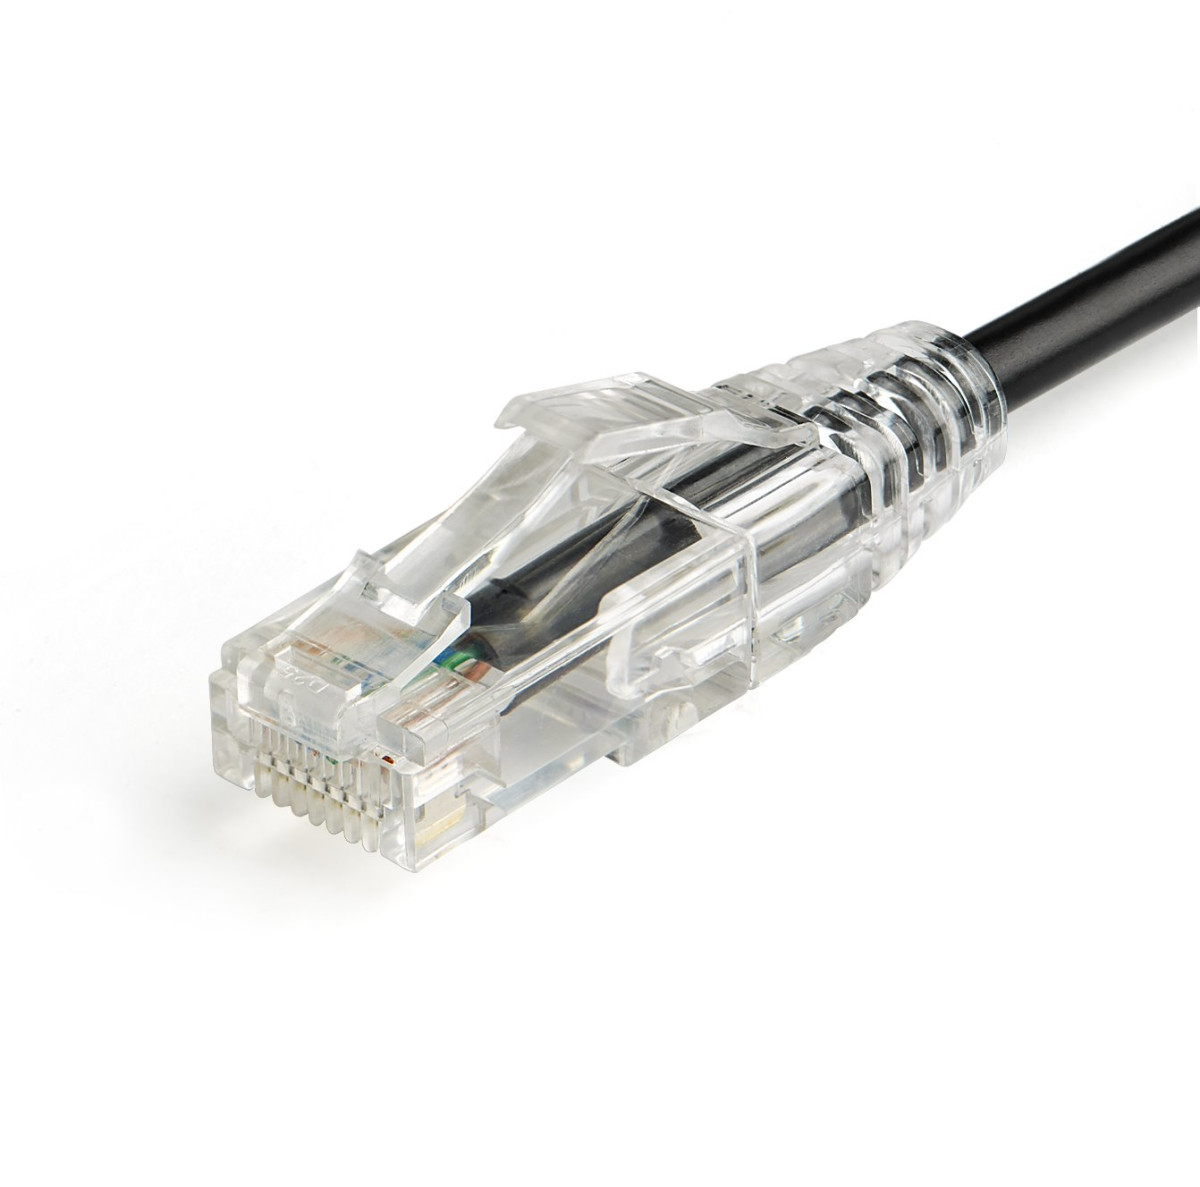 Cable - Cisco USB Console Cable 460Kbps